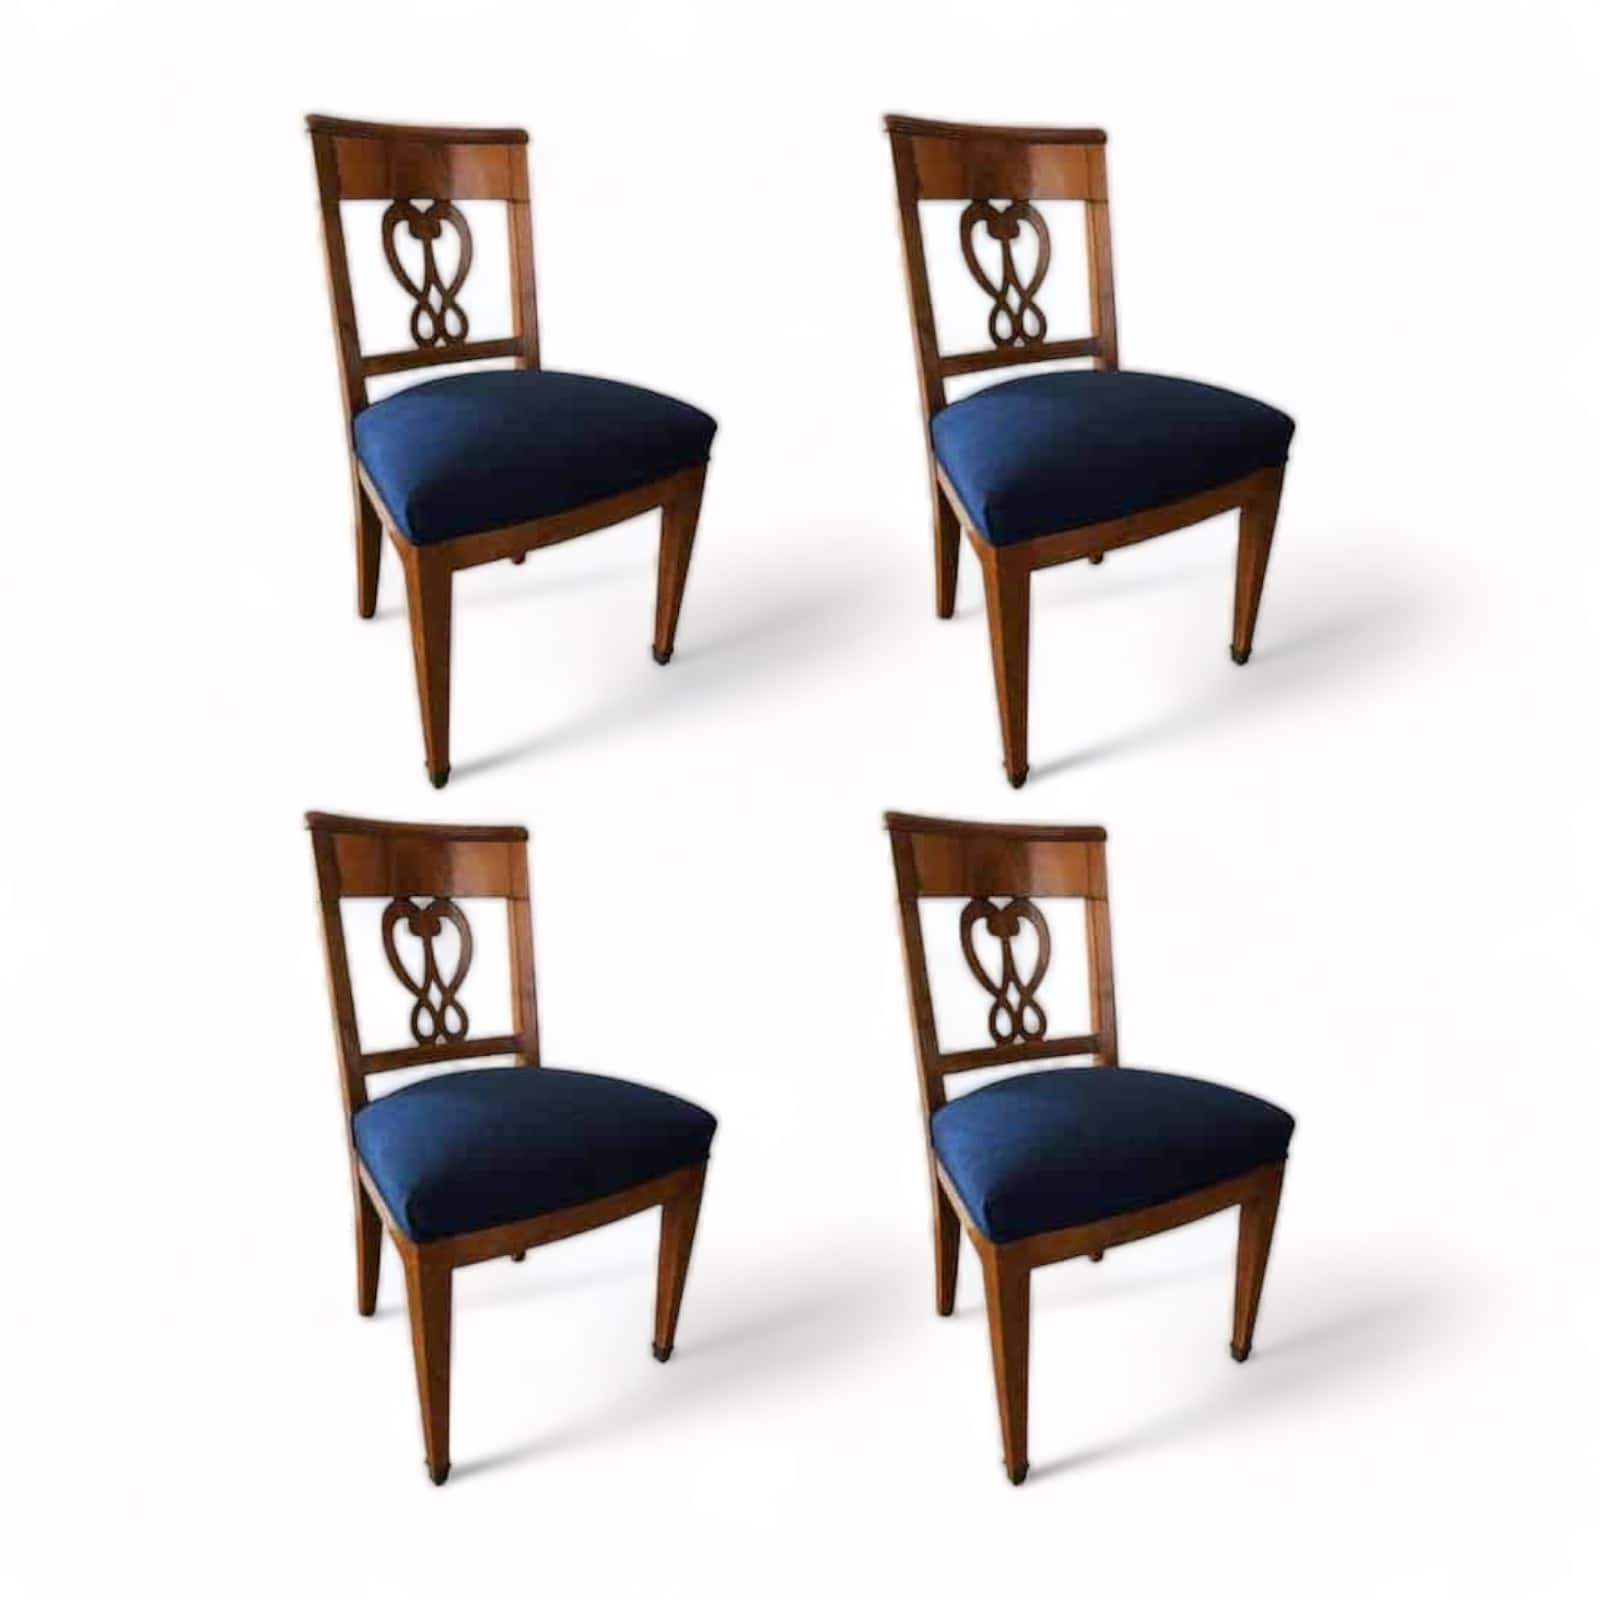 Sitting Pretty: Biedermeier Chair Design